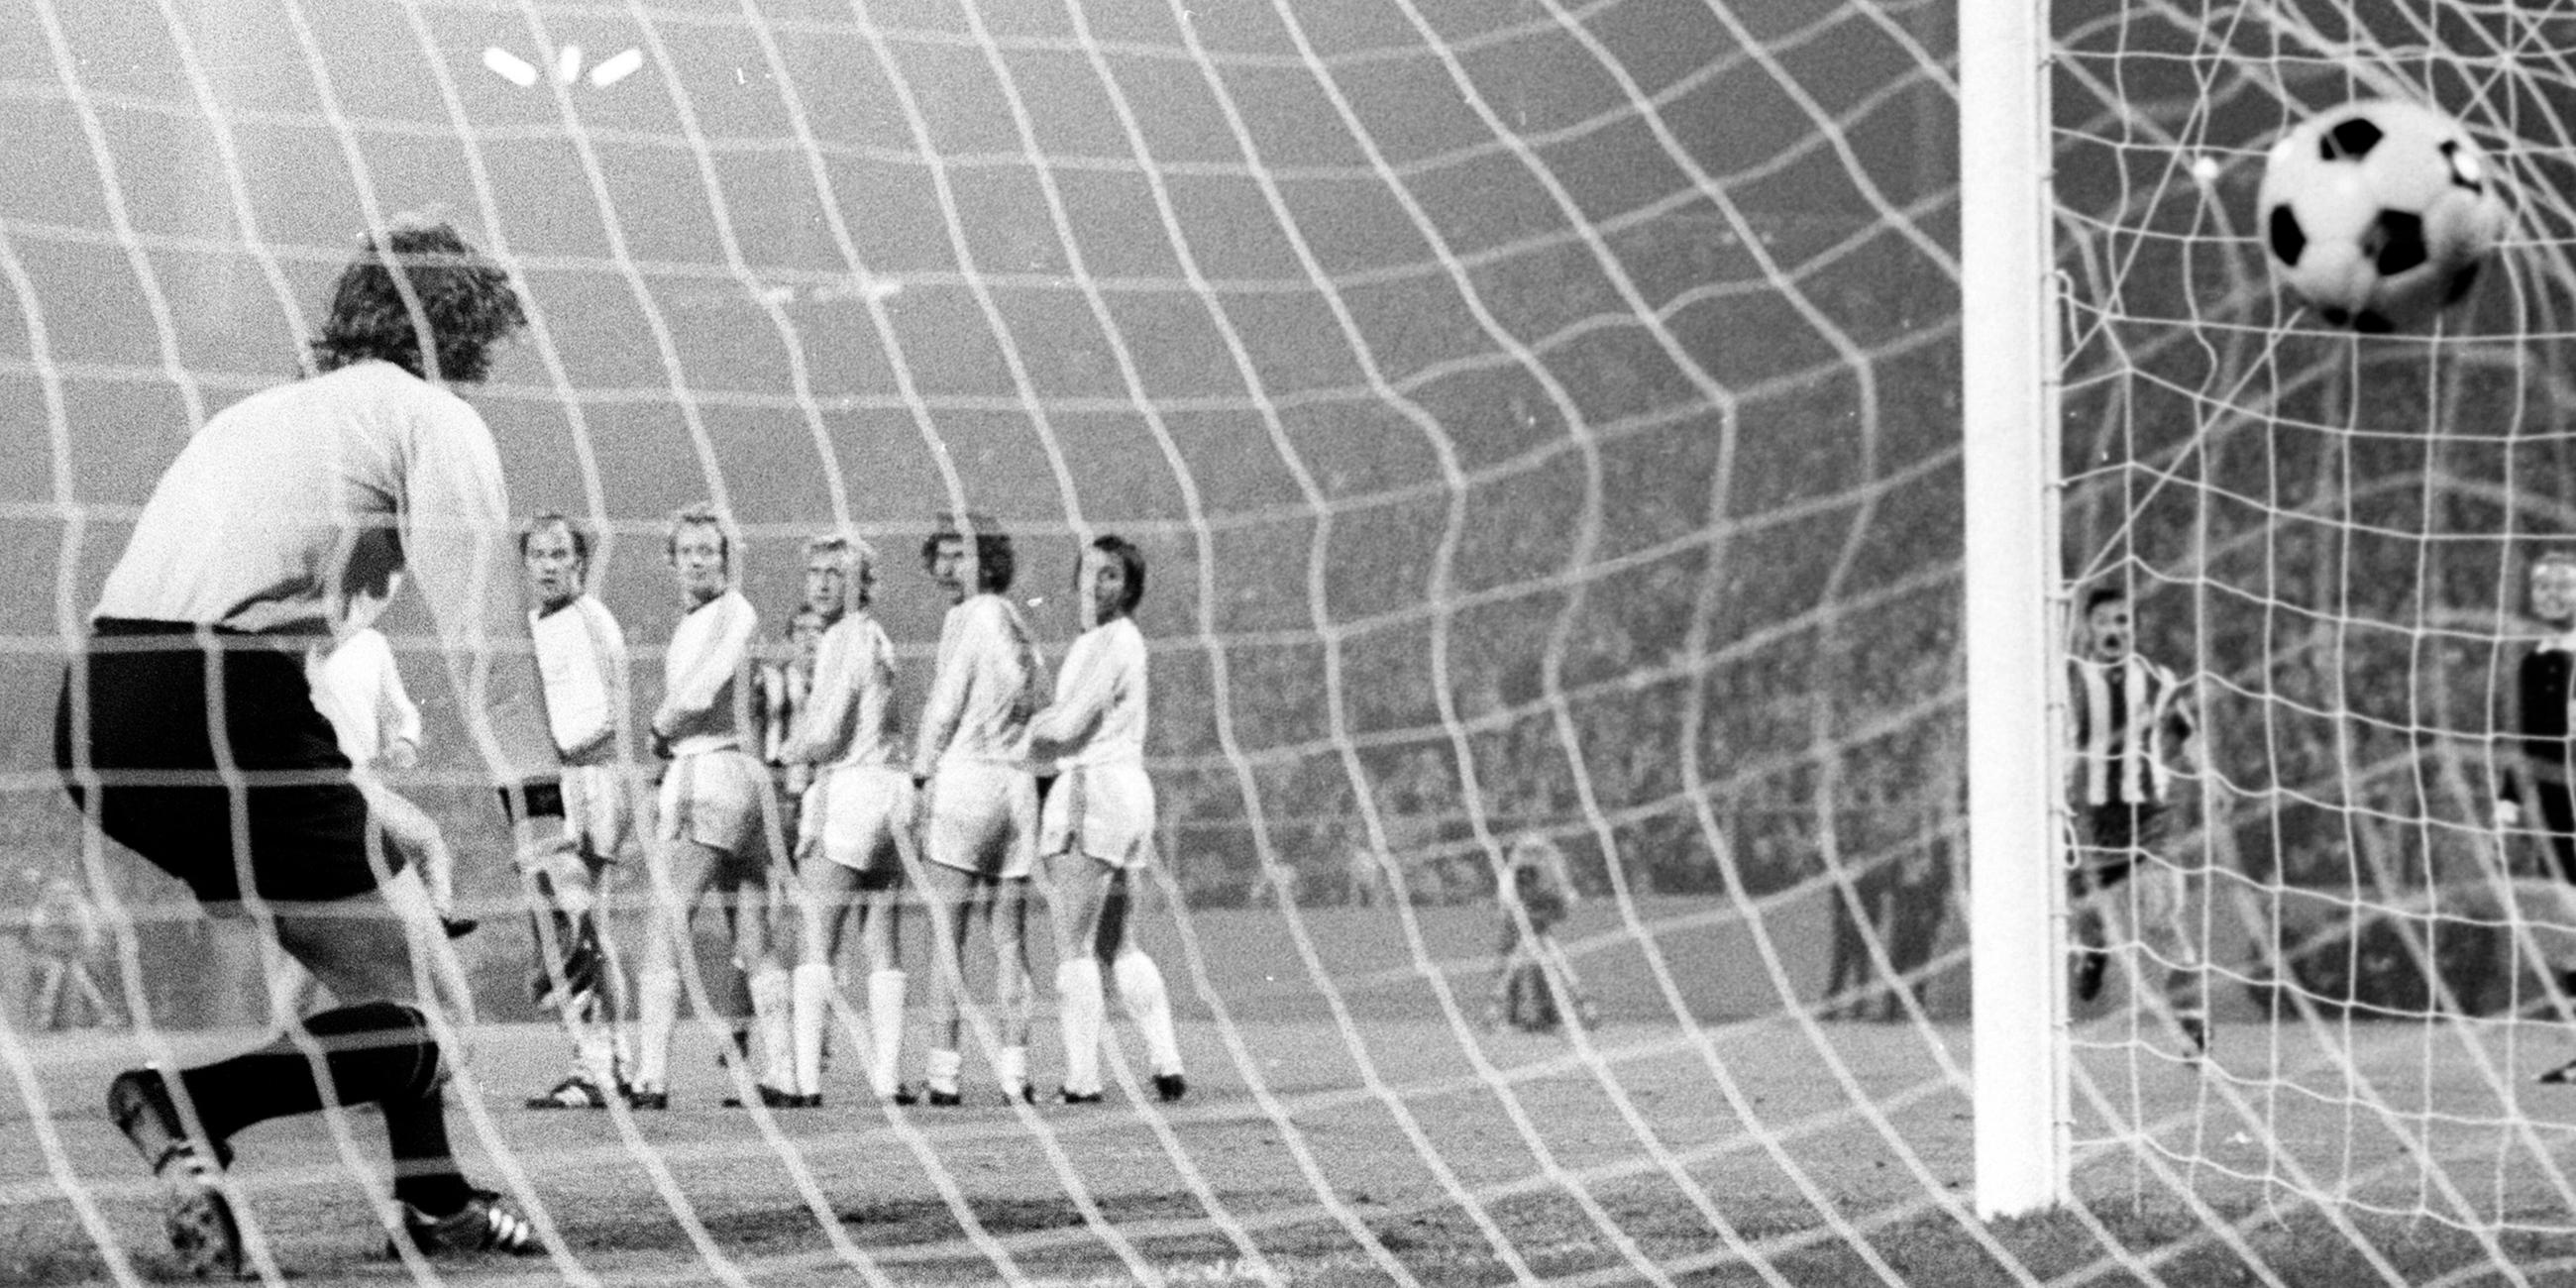 Archiv: or für Madrid gegen Torwart Sepp Maier, Franz Roth, Johnny Hansen, Bernd Dürnberger, Paul Breitner und Jupp Kapellmann am 15.05.1974